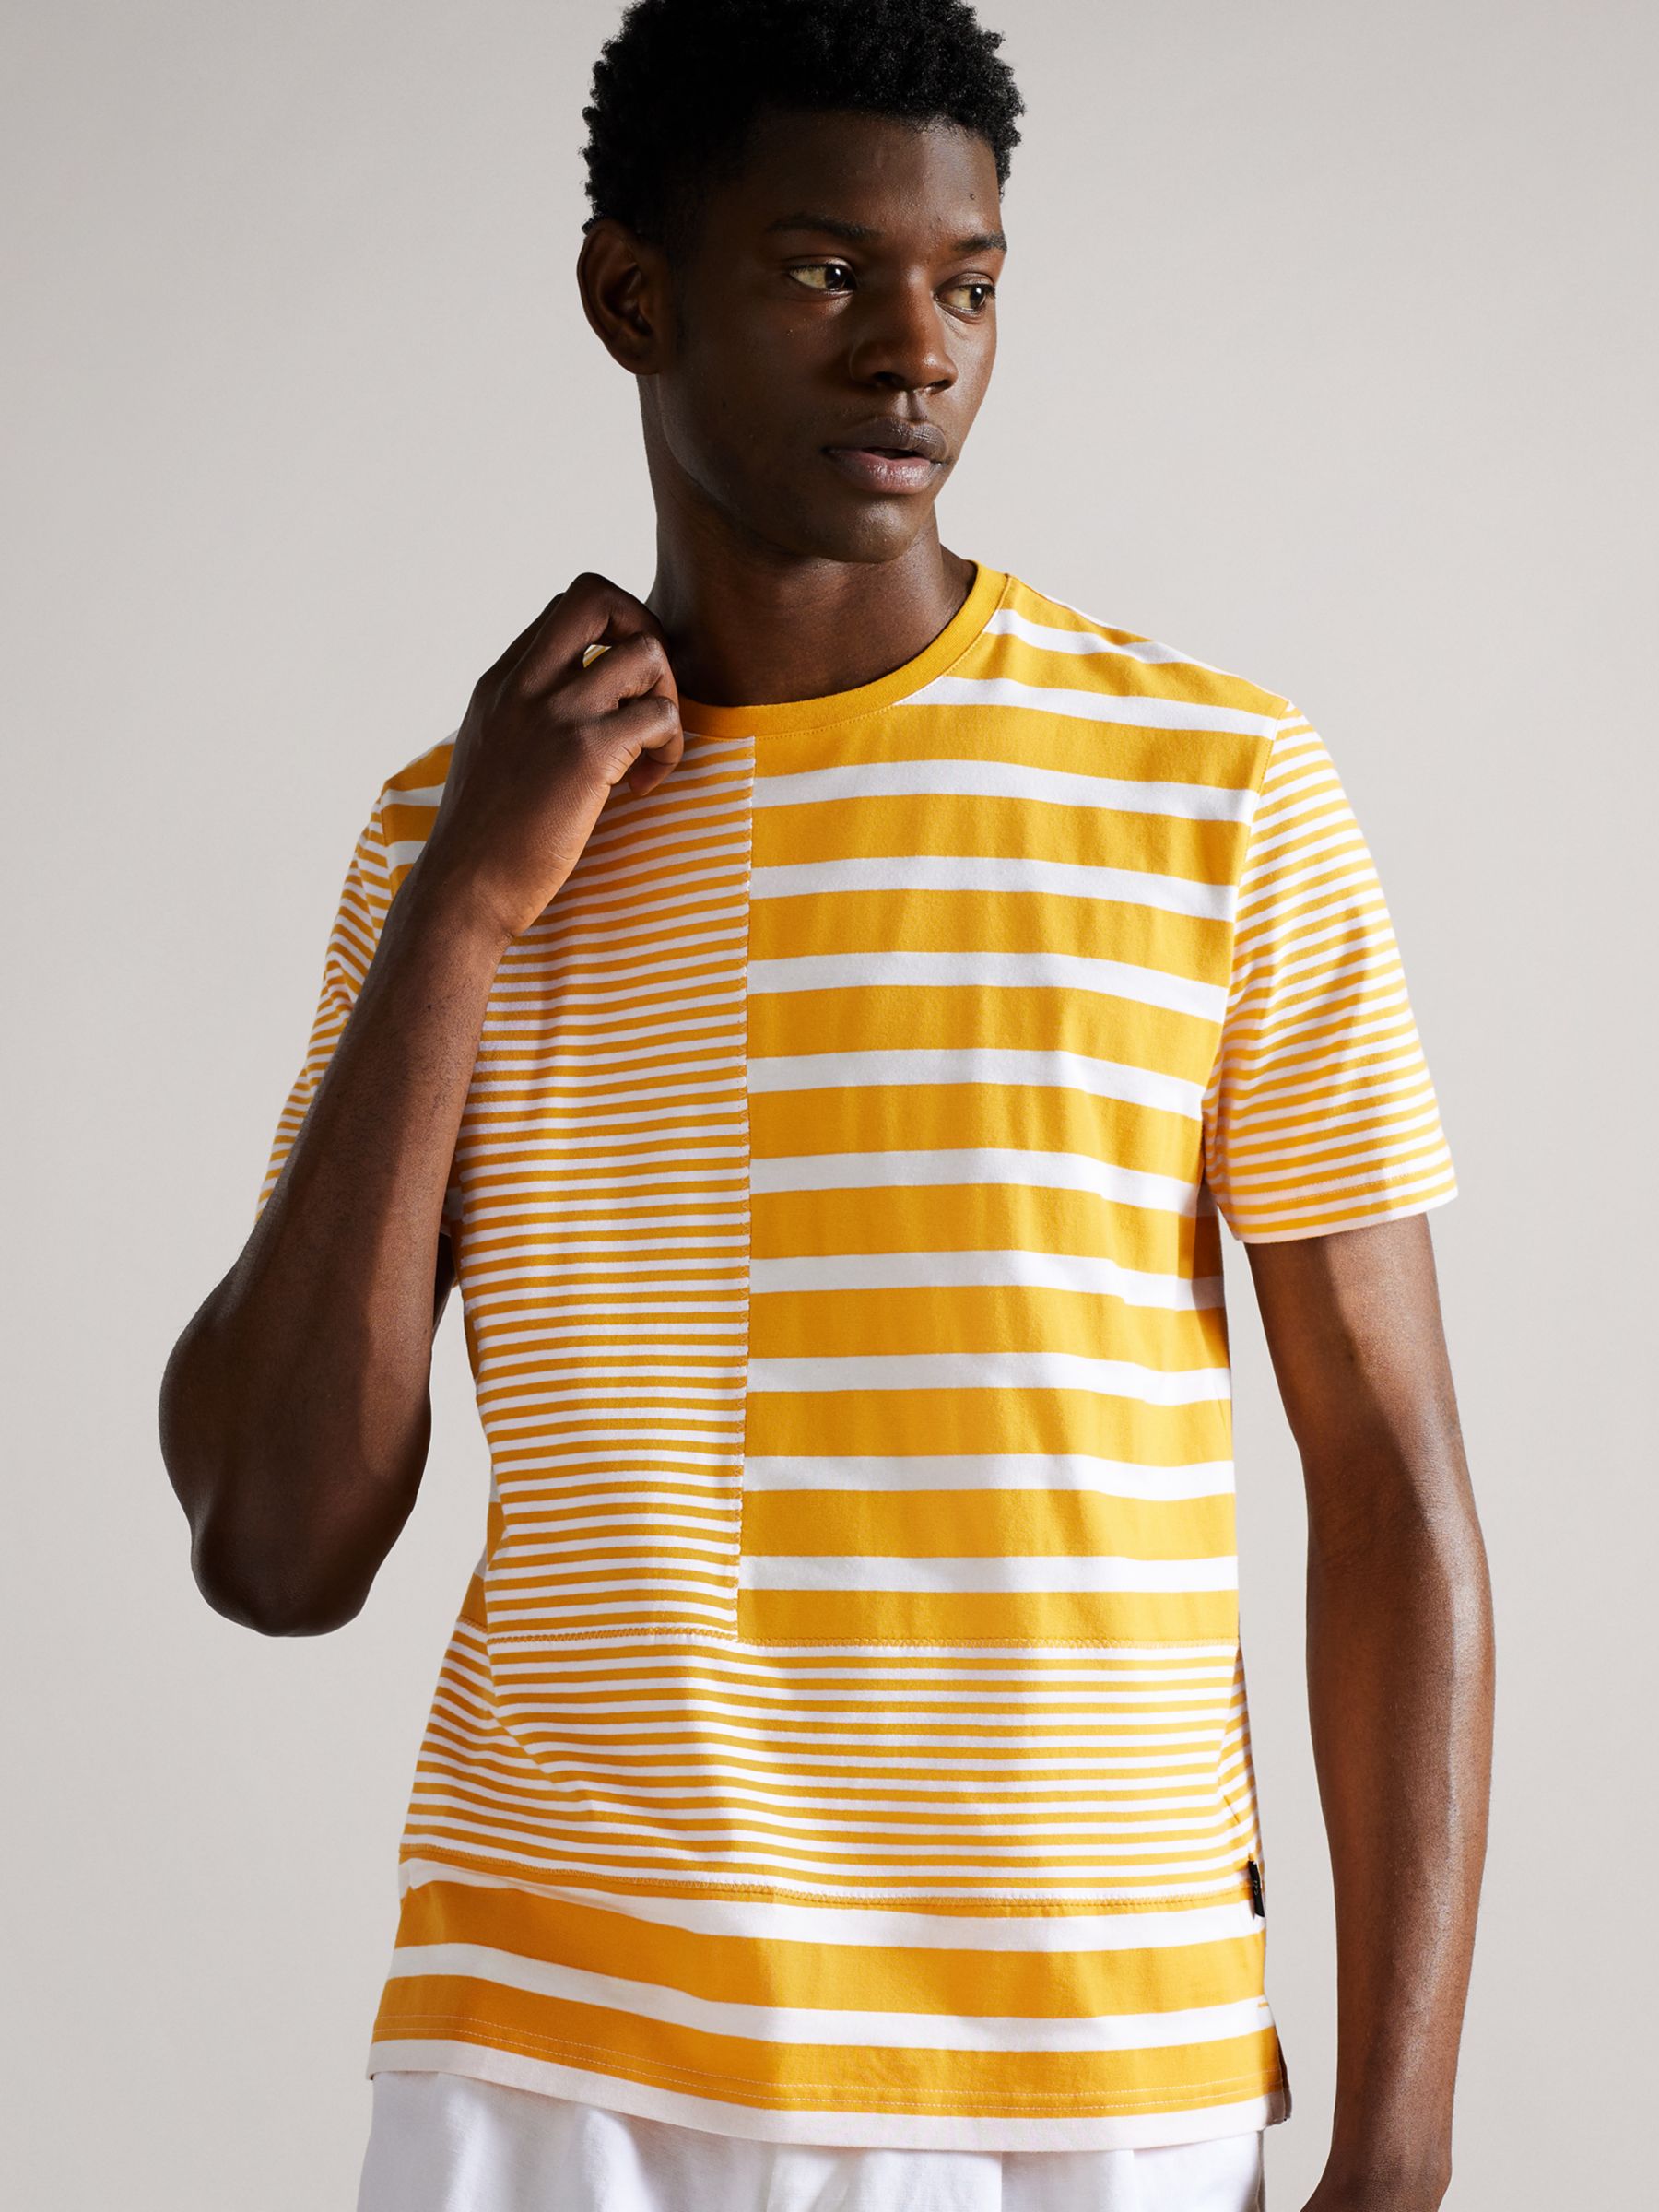 hemmeligt Strengt Pointer Ted Baker Lyming Contrast Stripe T-Shirt, Orange/Multi, XS